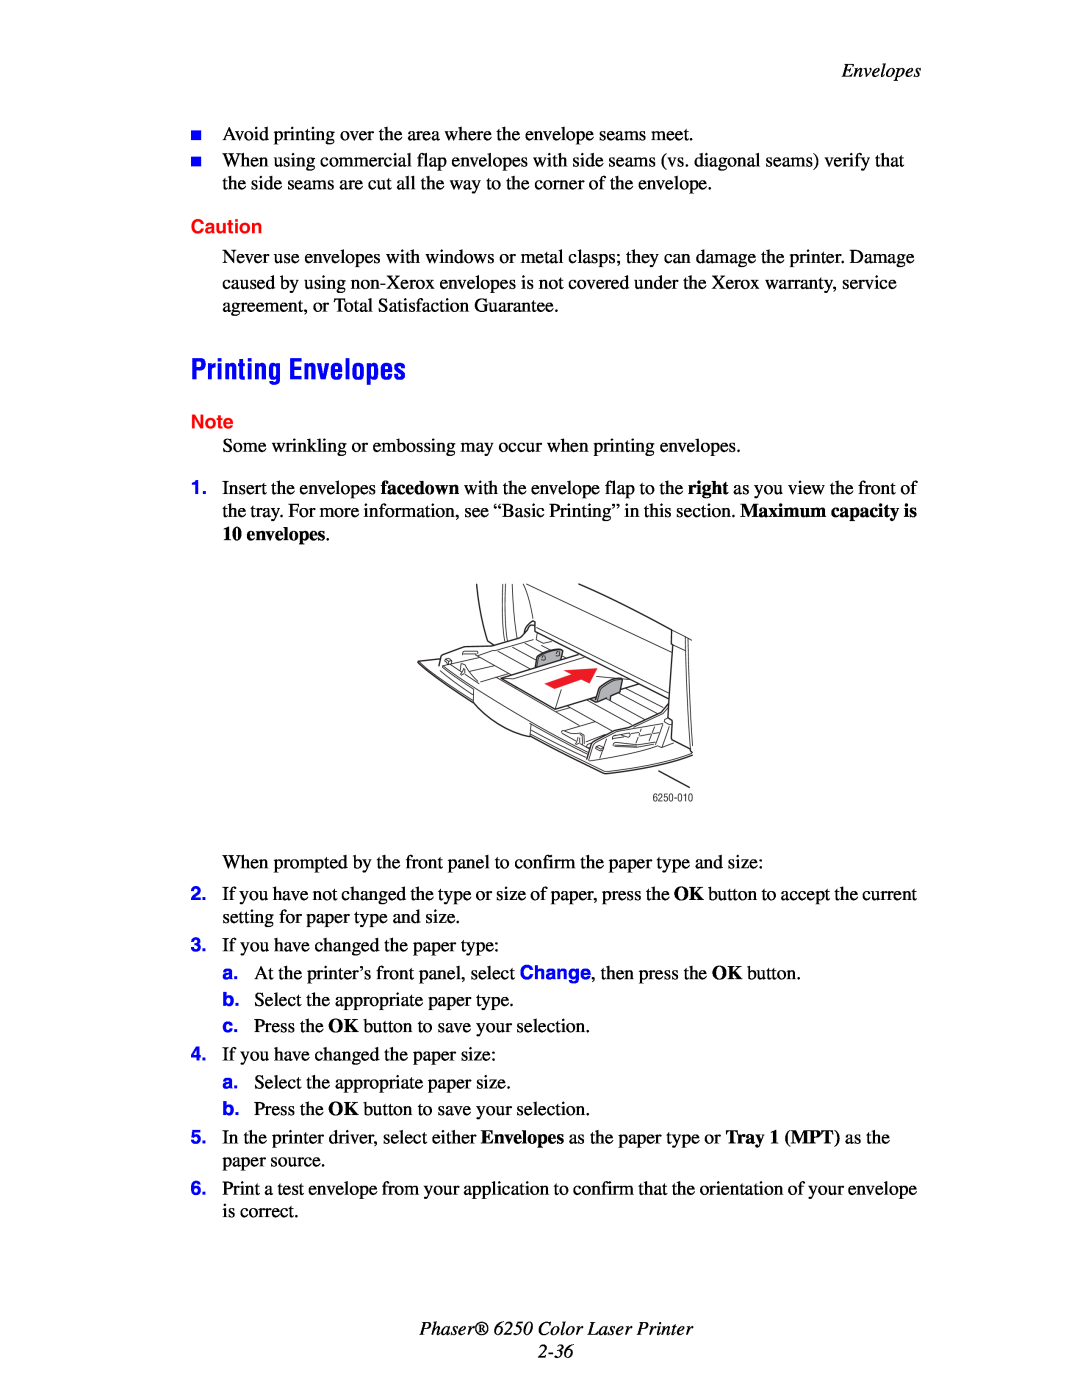 Xerox manual Printing Envelopes, Phaser 6250 Color Laser Printer 2-36 